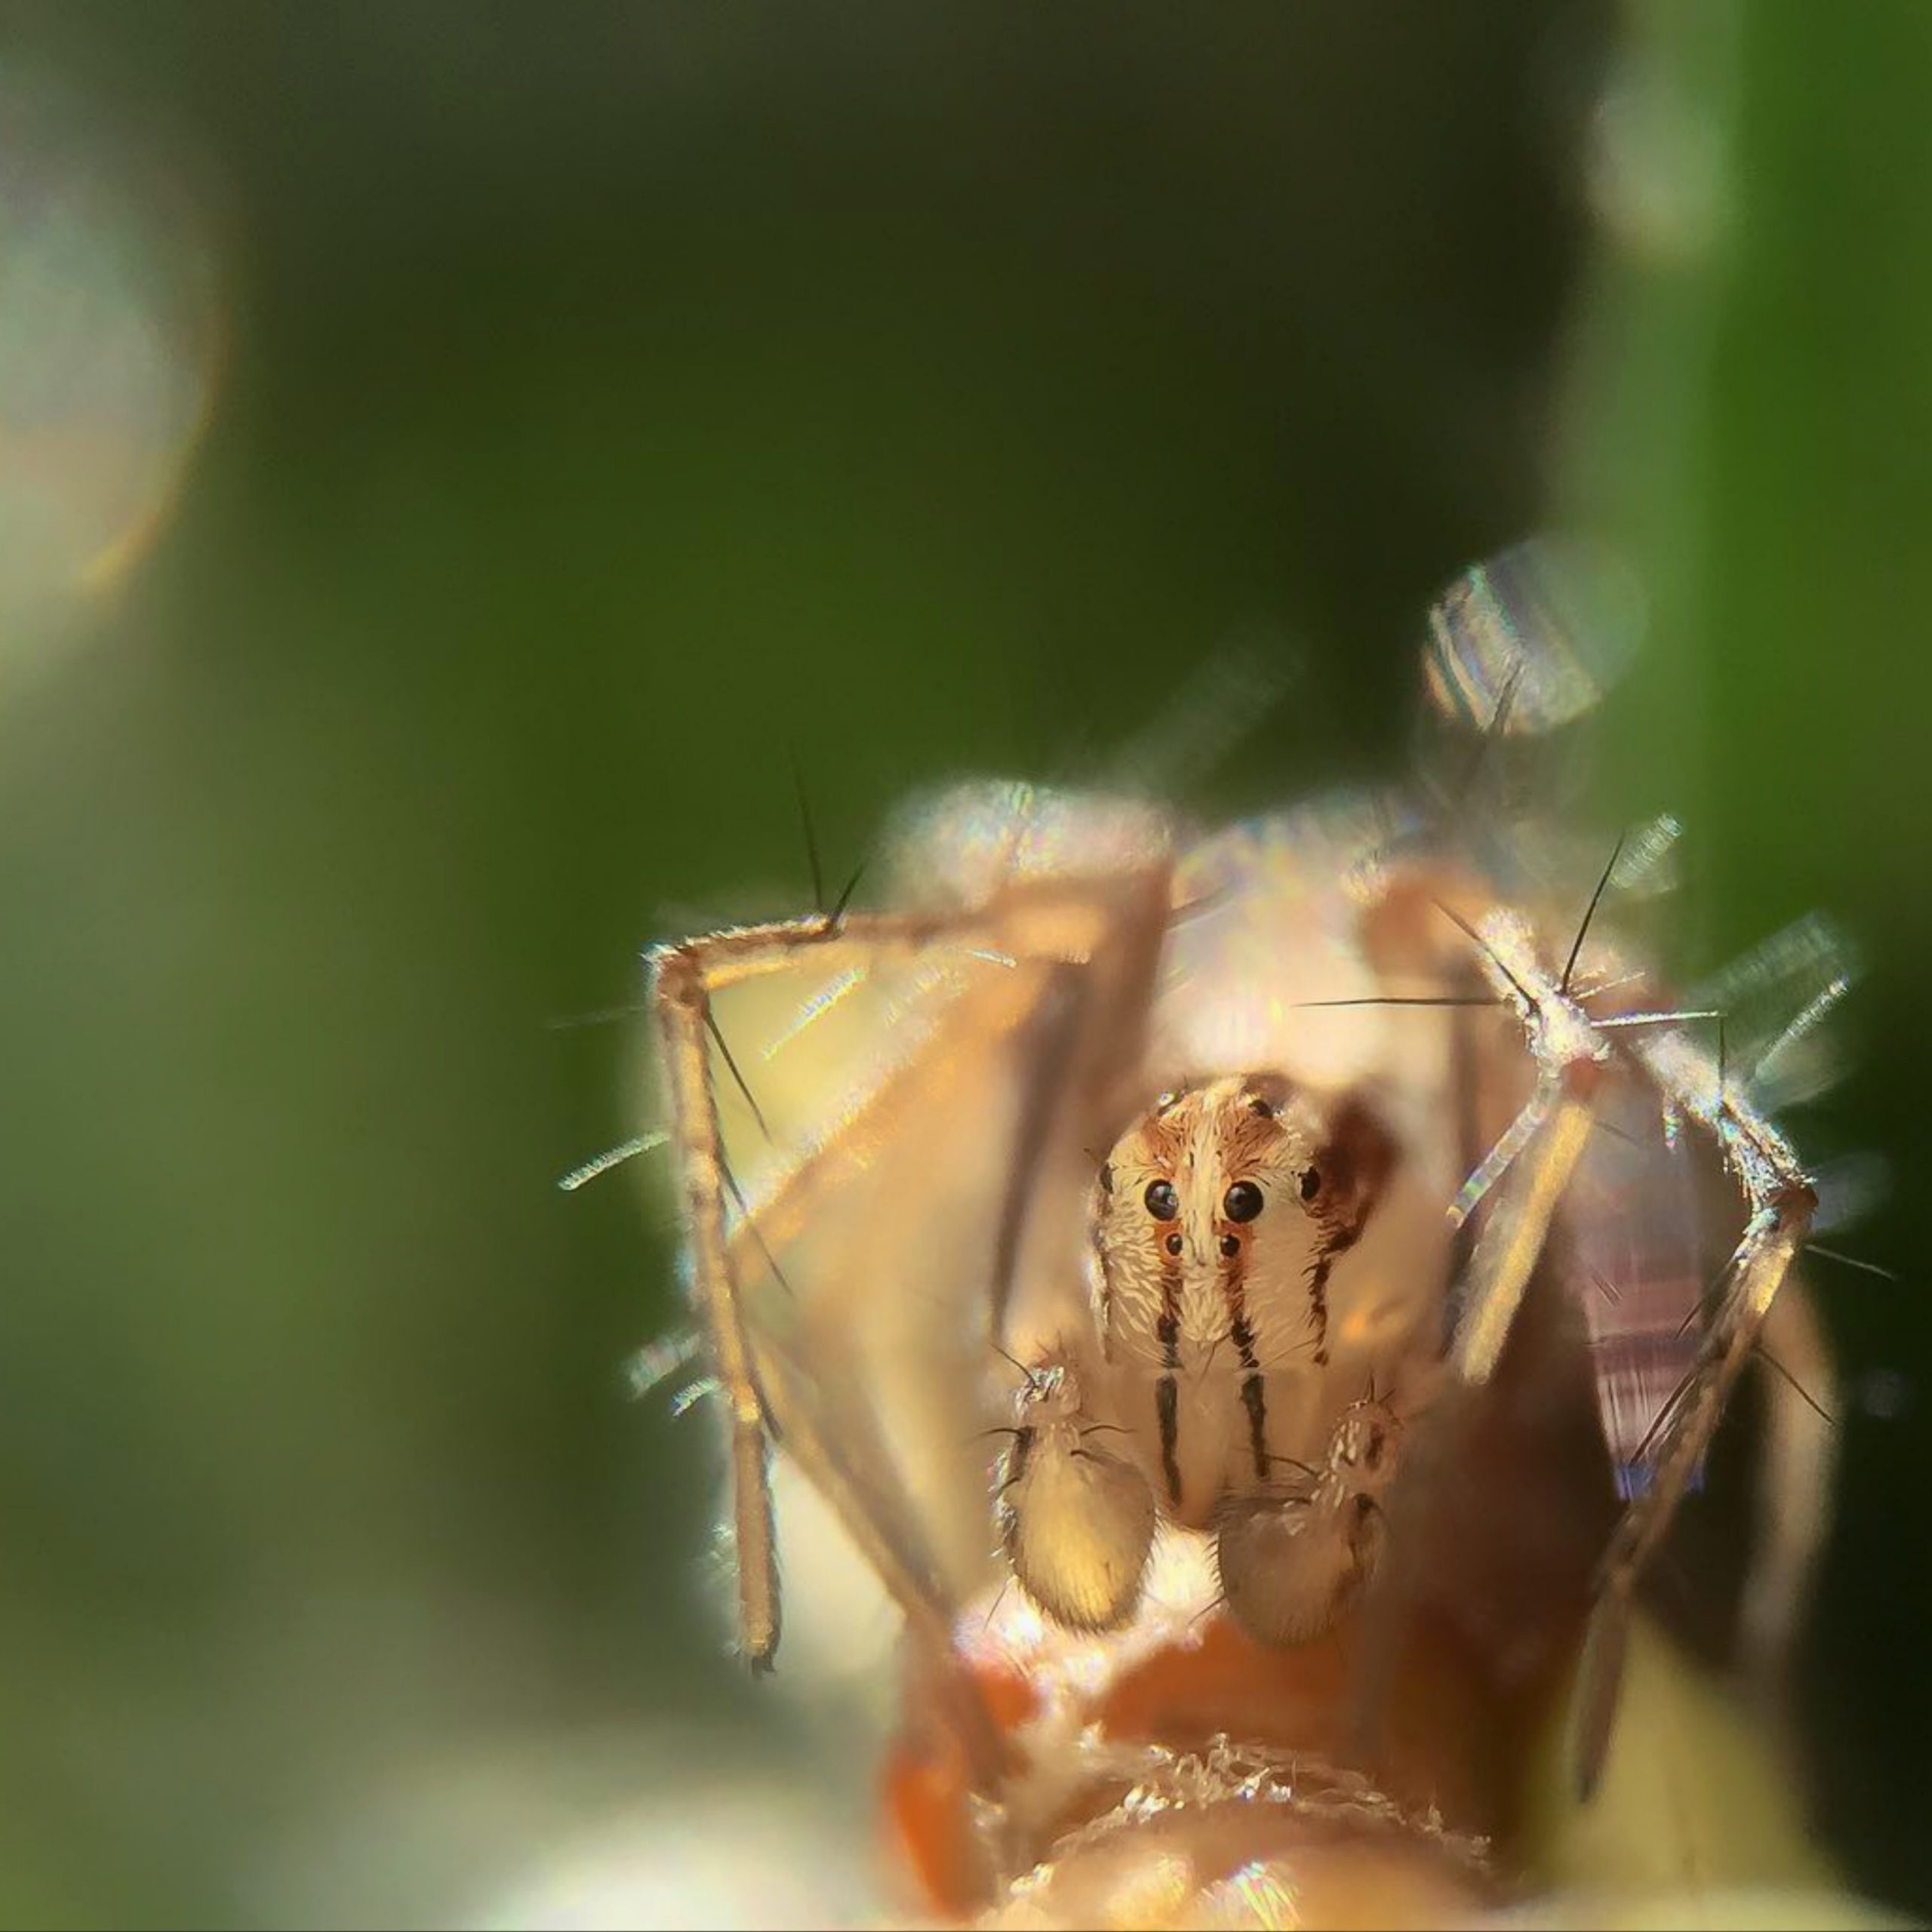 Spider macro view